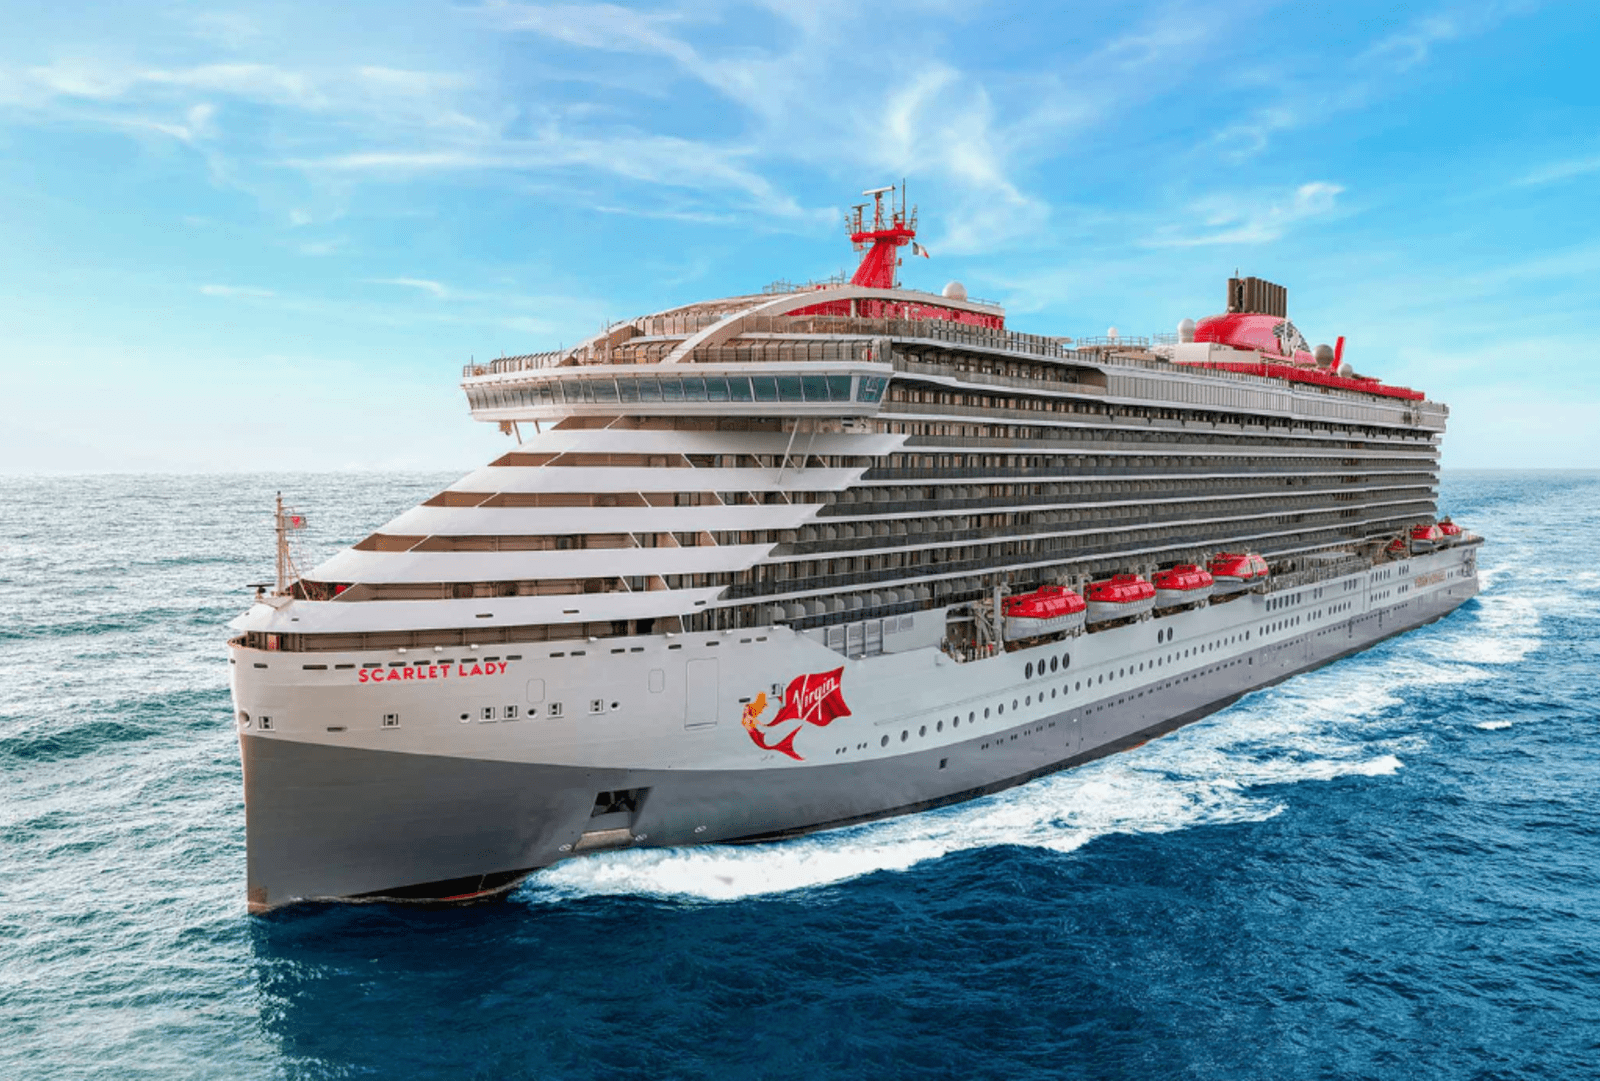 Virgin Voyages Scarlet Lady cruise ship 